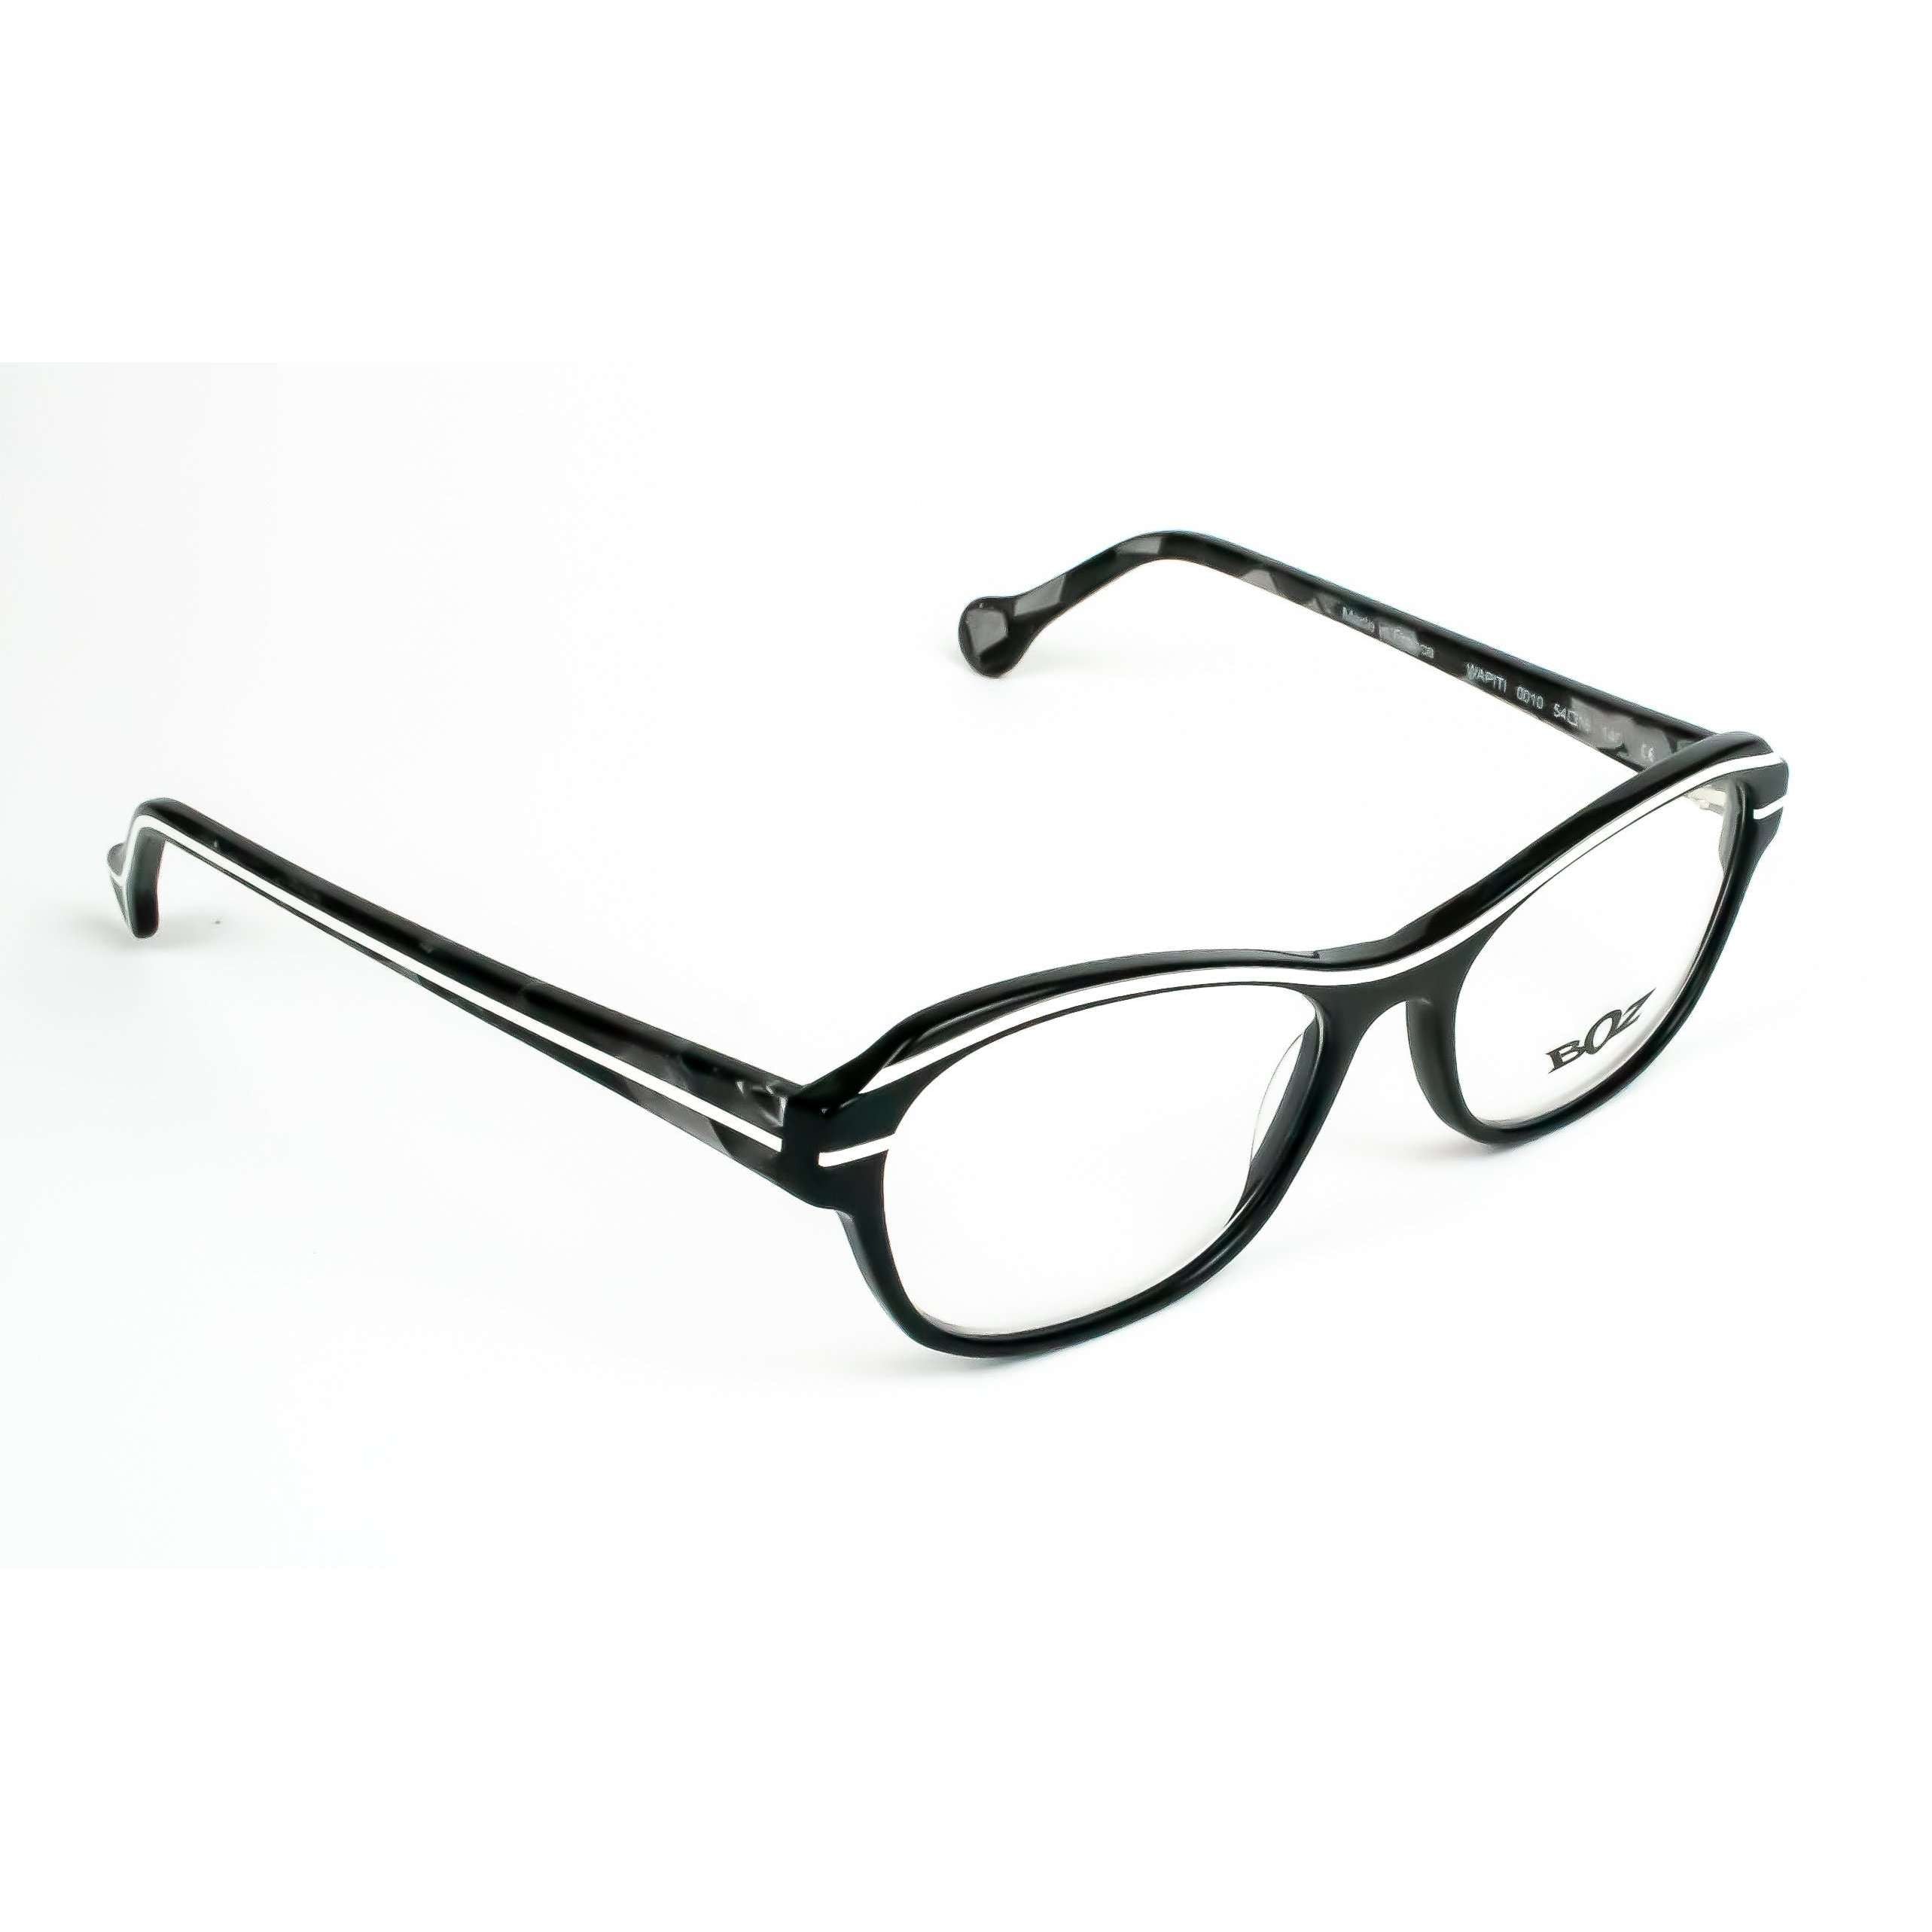 BOZ Wapiti Black Oval Glasses